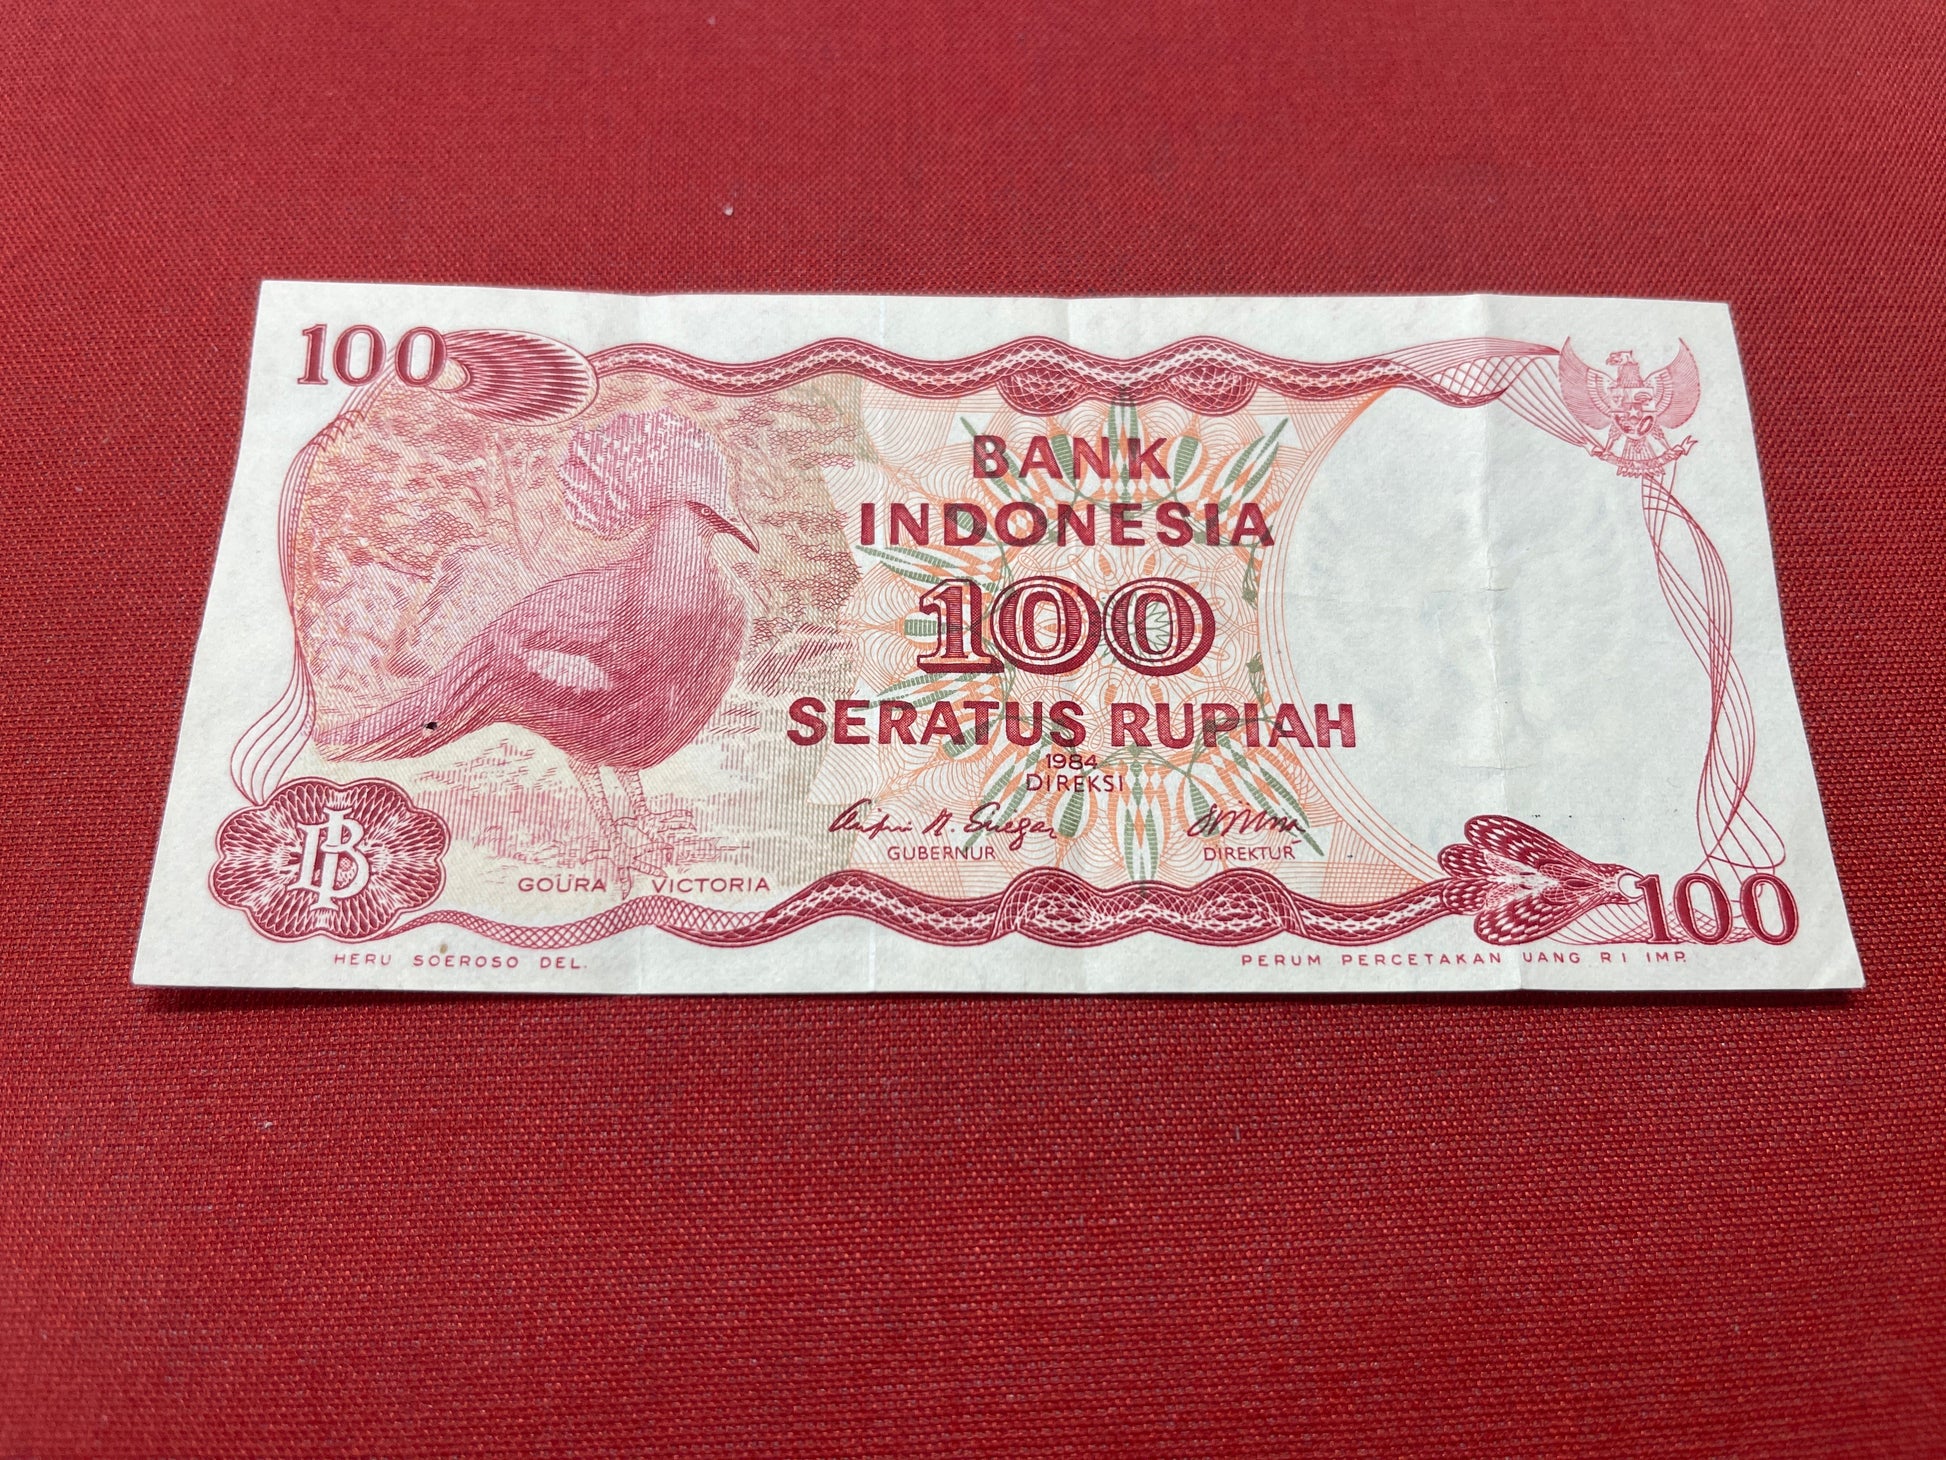 Bank of Indonesia 100 Seratus Rupiah 1984